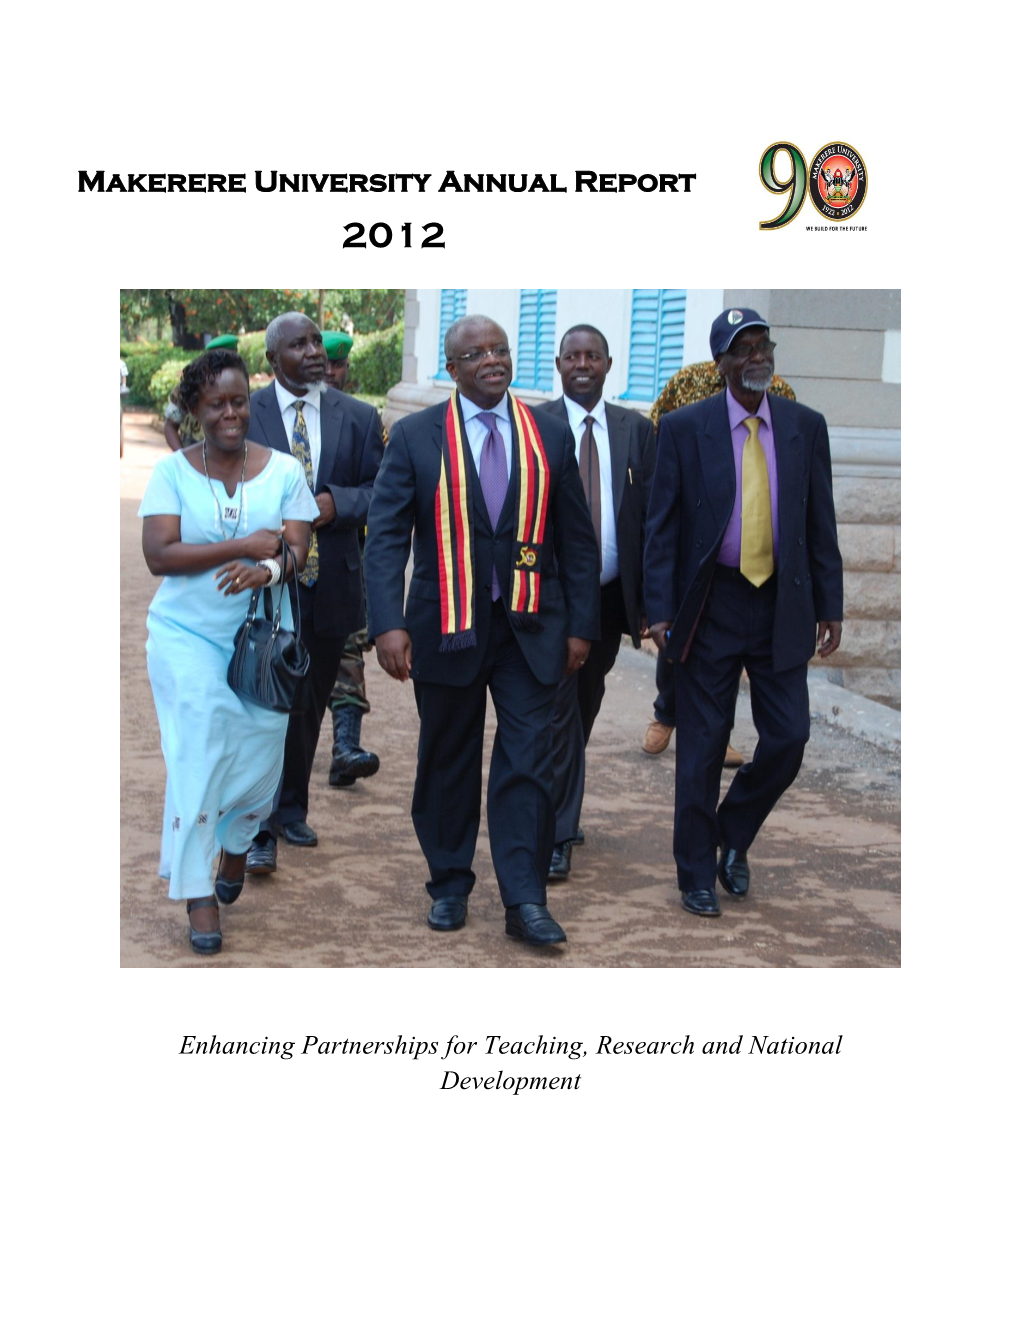 Makerere University Annual Report 2012